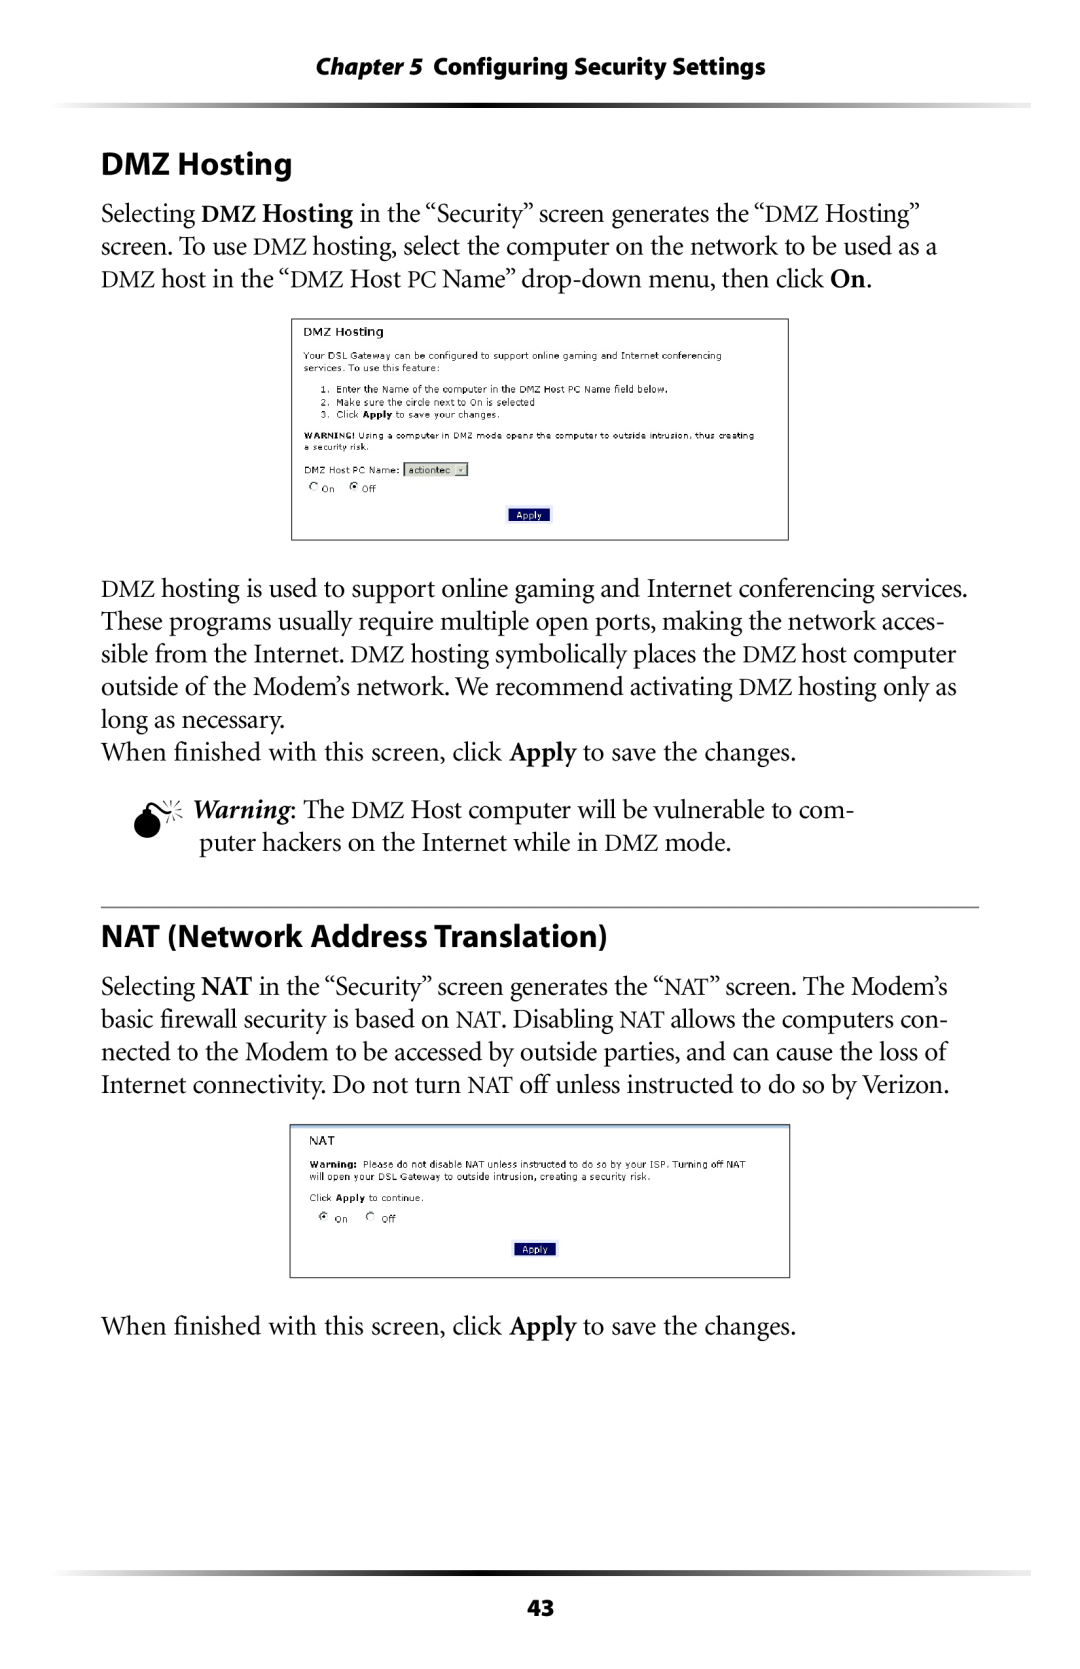 Verizon GT701C user manual DMZ Hosting, NAT Network Address Translation 